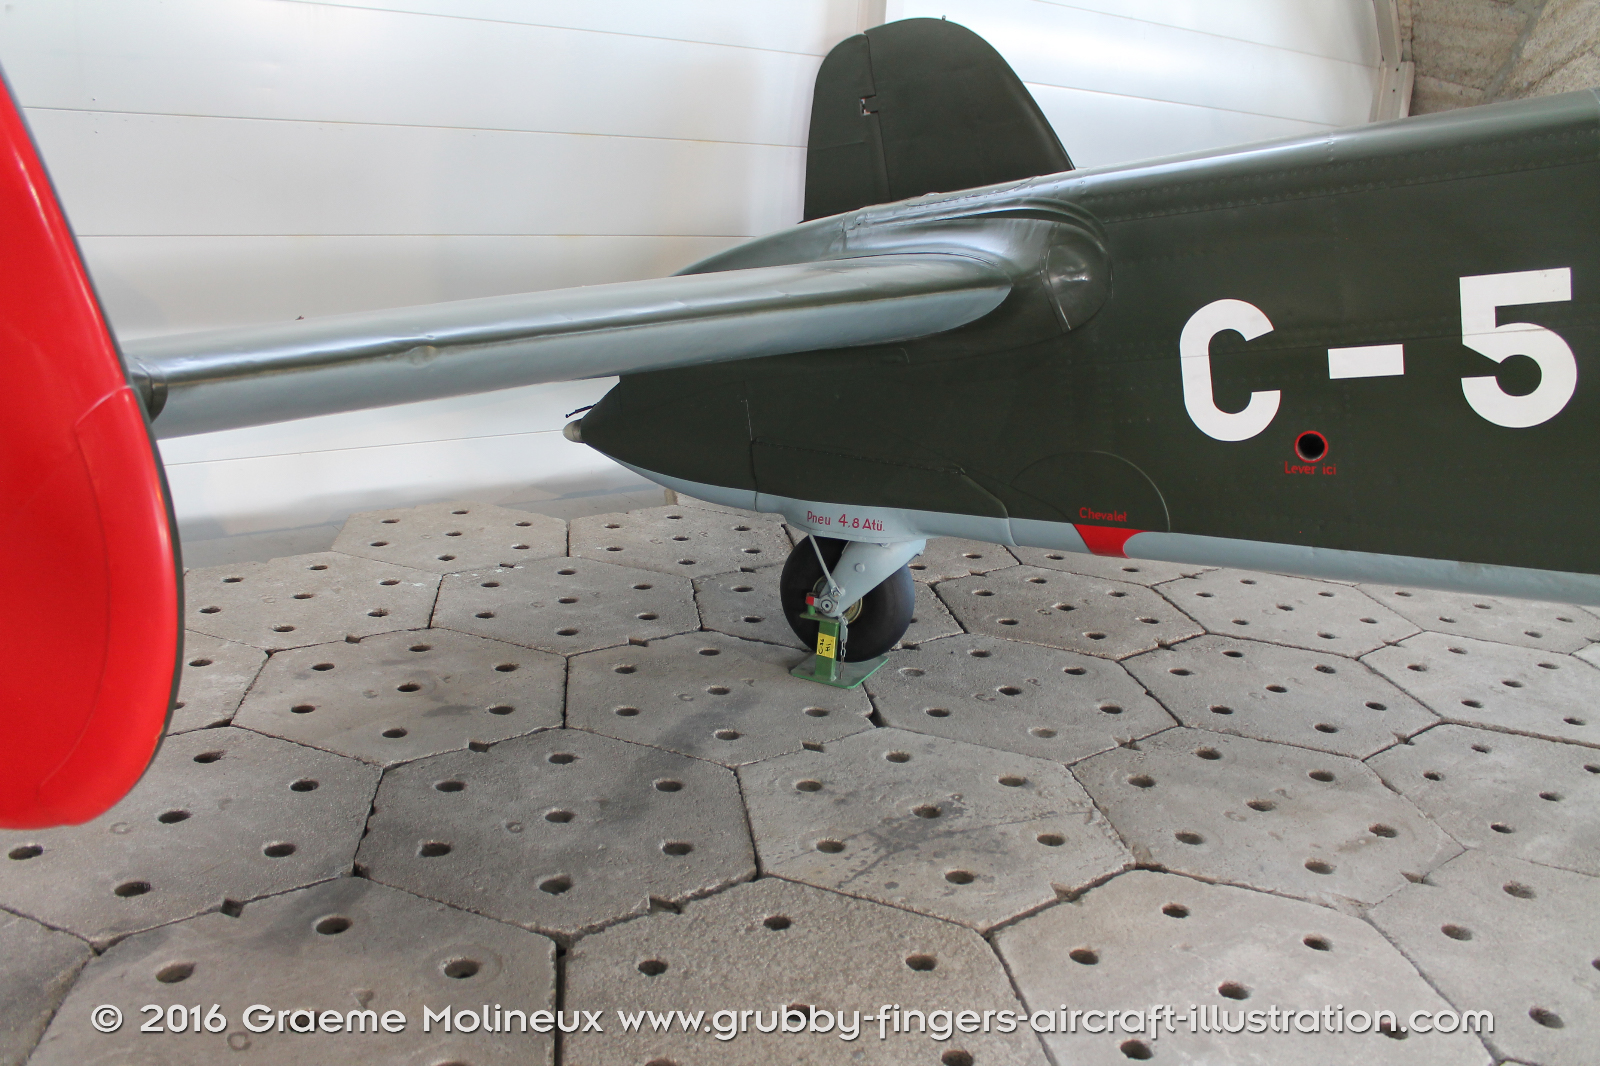 K+W_C-36_C-534_Swiss_Air_Force_Museum_2015_10_GrubbyFingers